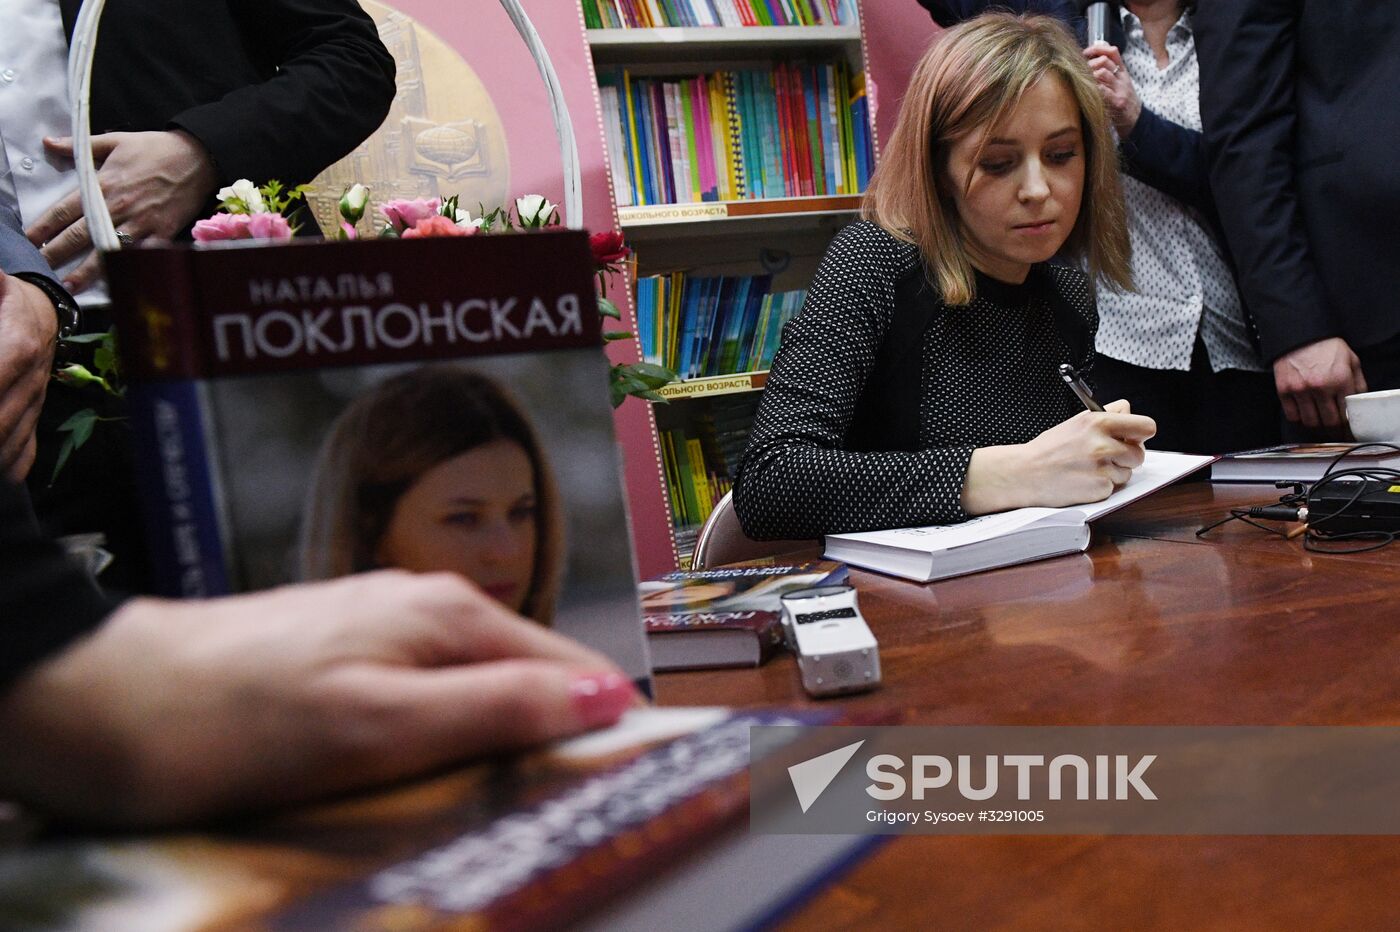 Presentation of Natalya Poklonskaya's book 'Devotion to Faith and Fatherland'